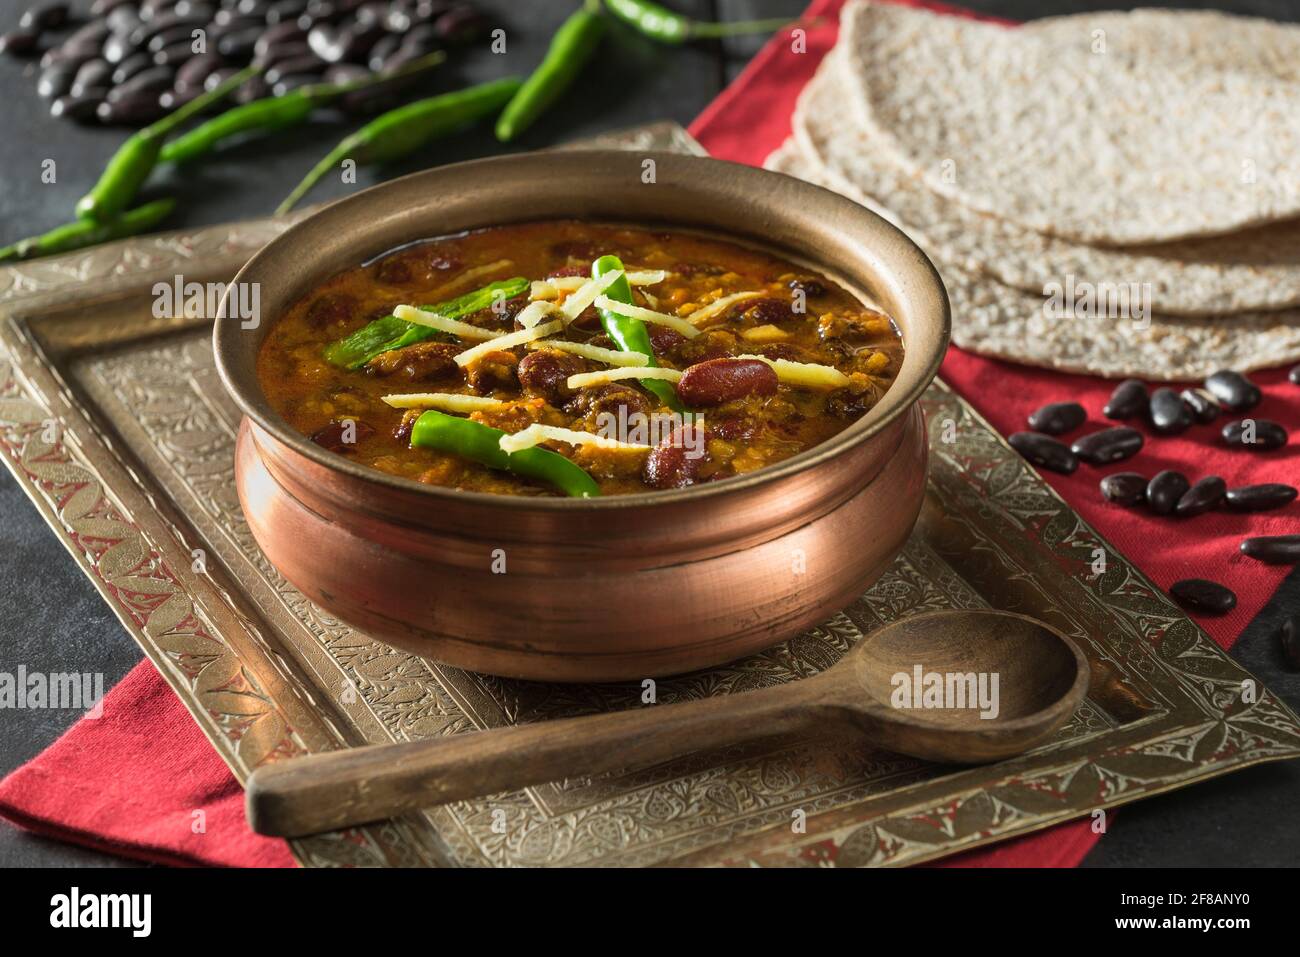 Rajma masala. Red kidney bean curry. India Food Stock Photo